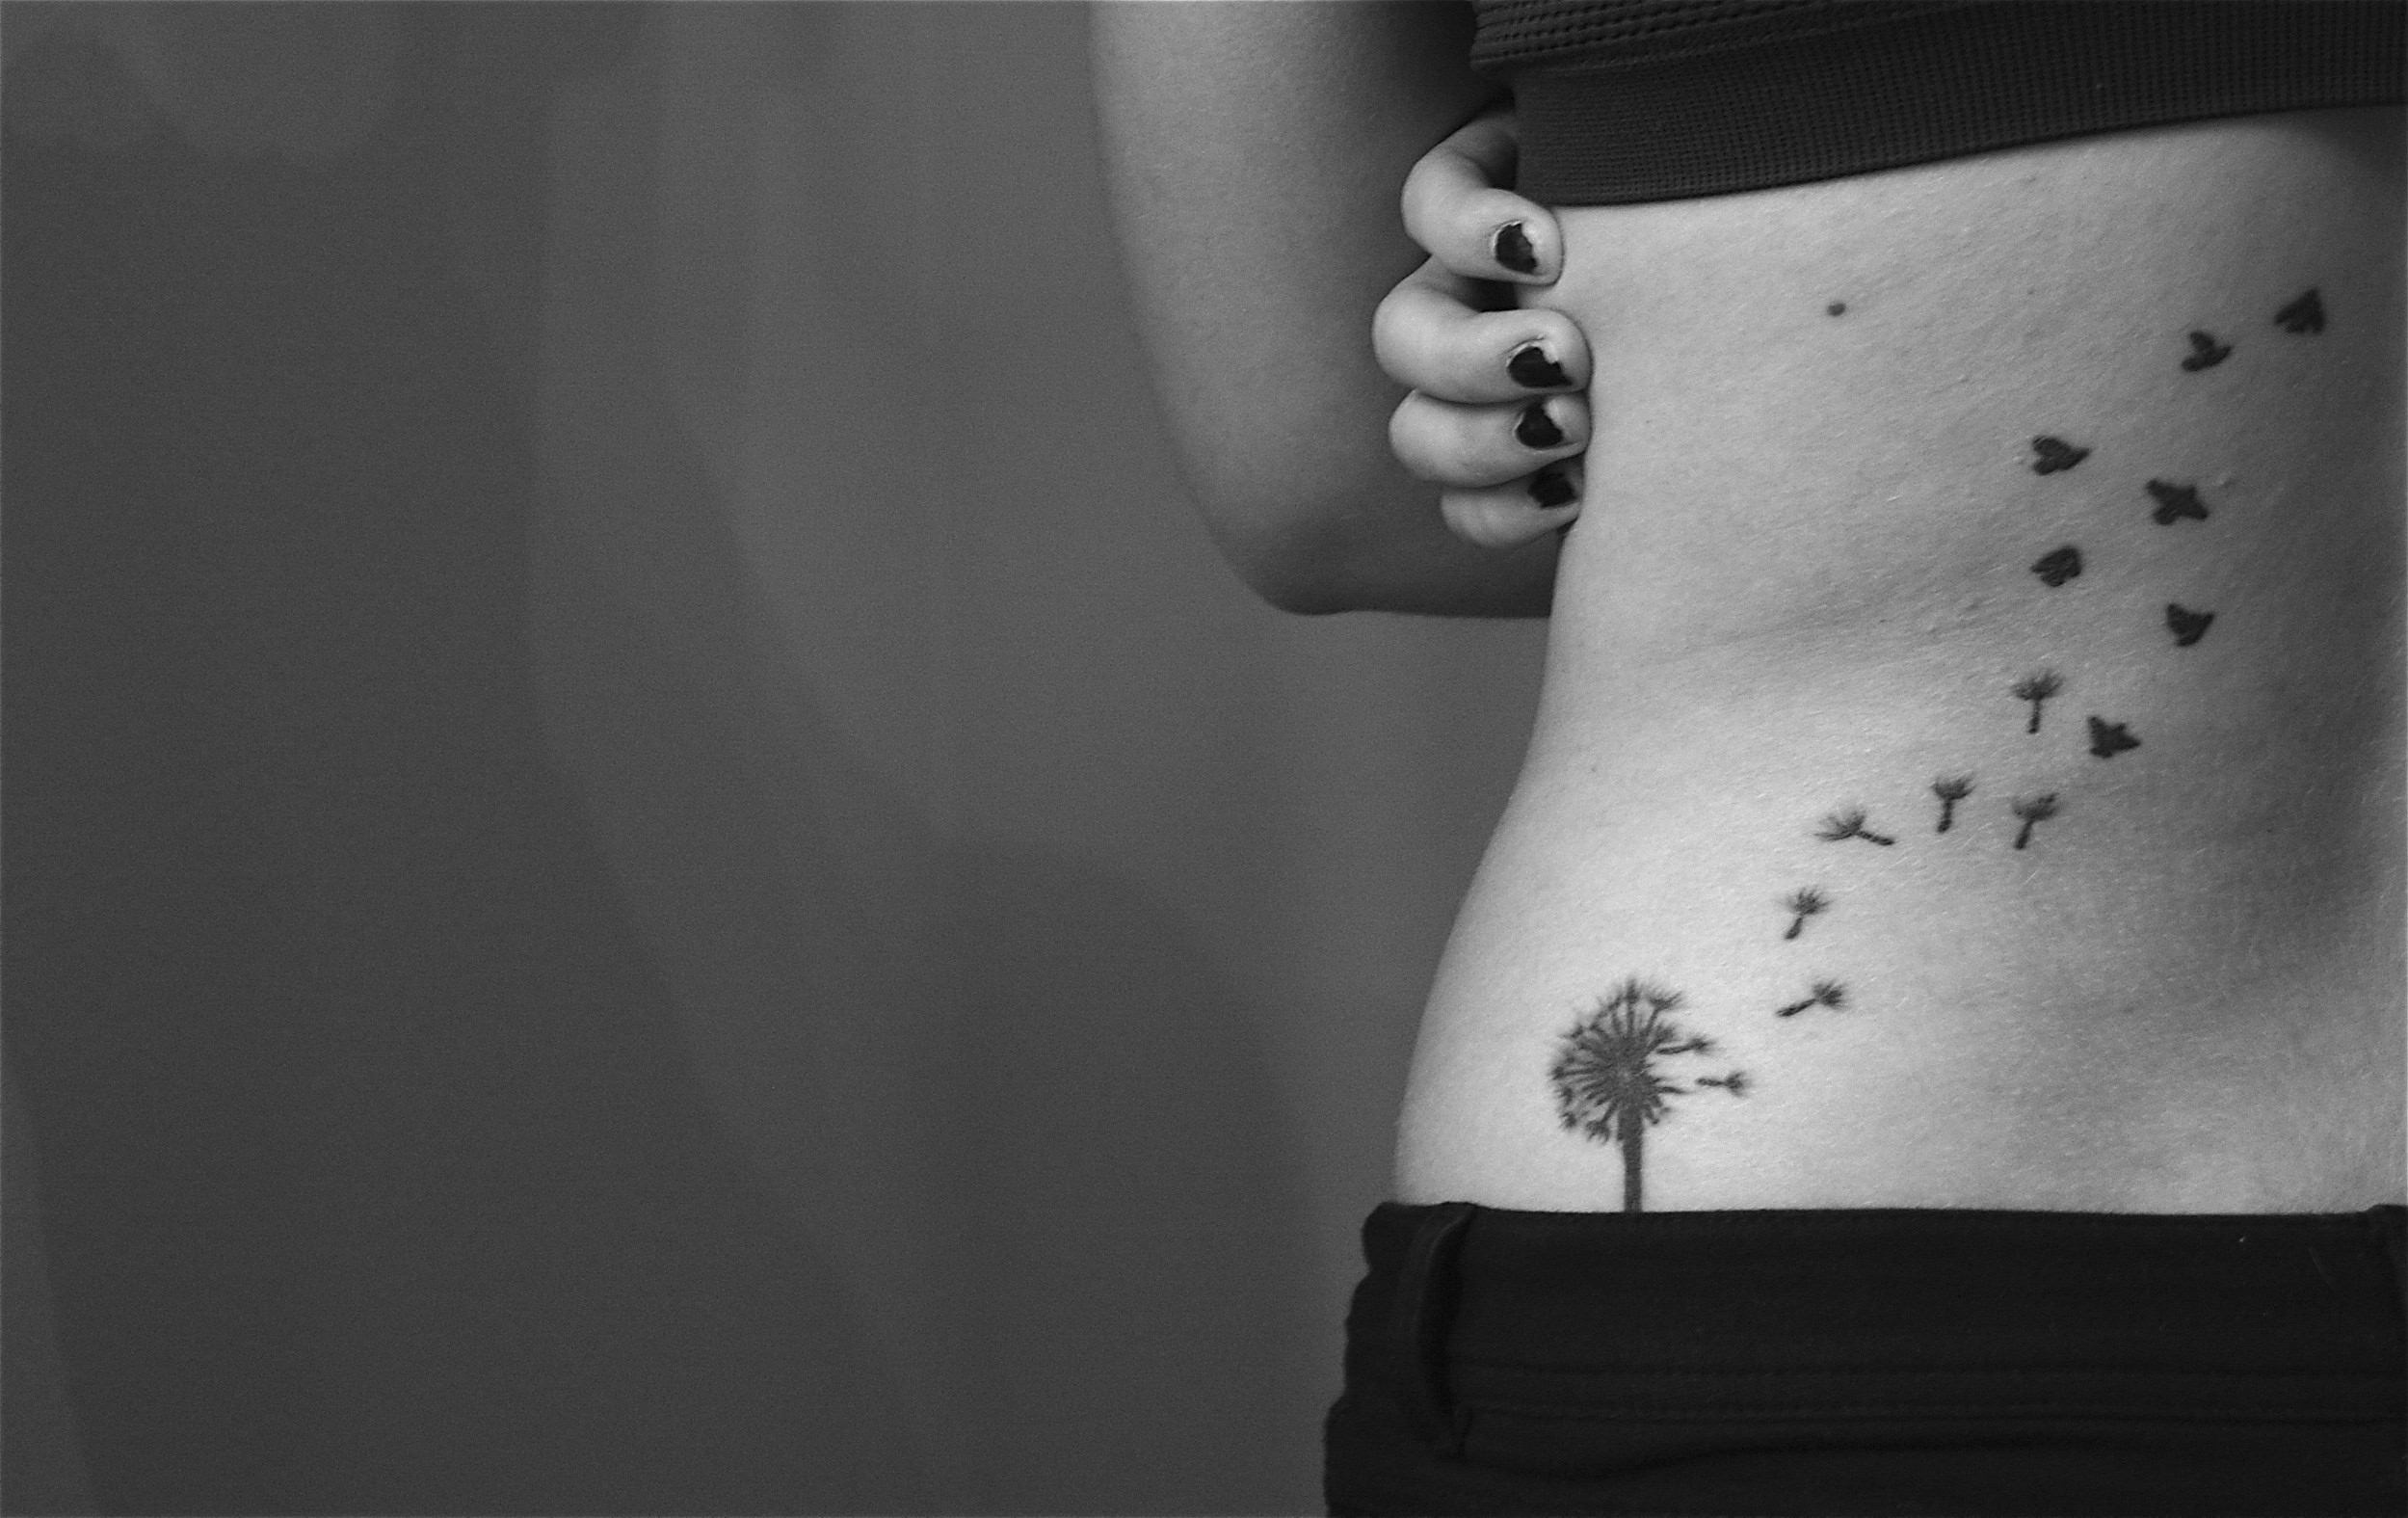 Dandelion Bird Tattoo On Hip